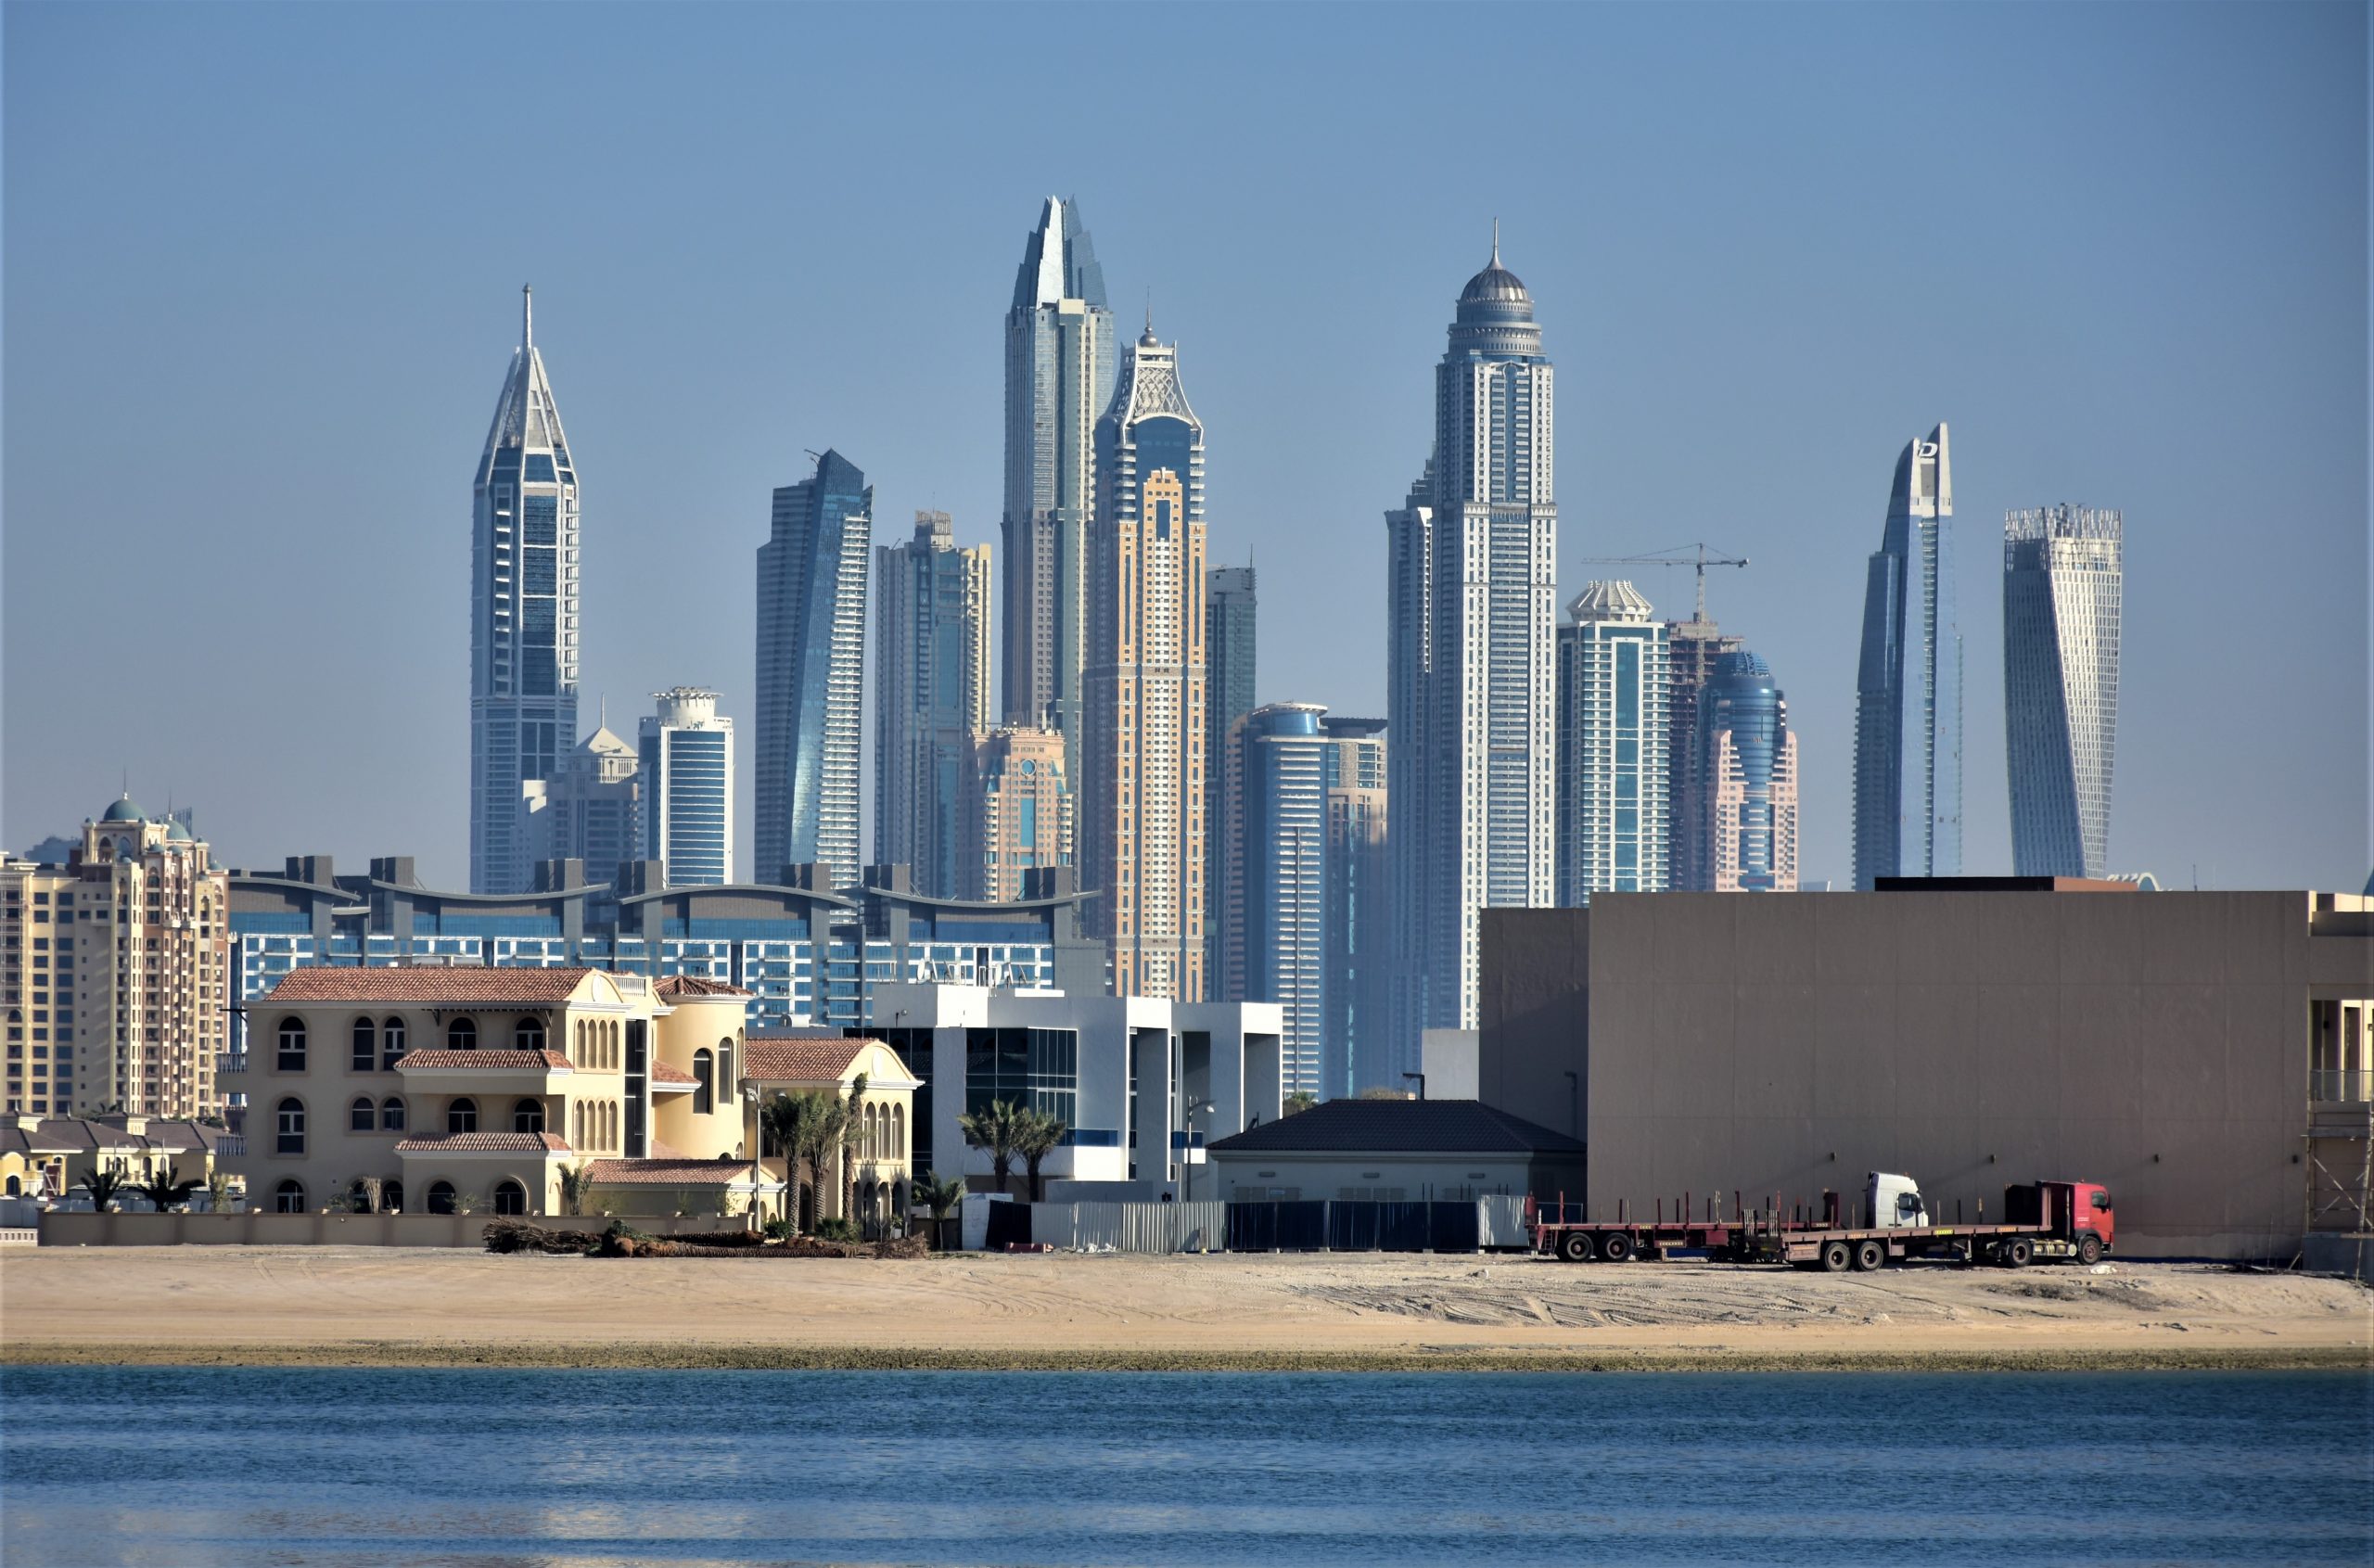 Tall buildings in Dubai